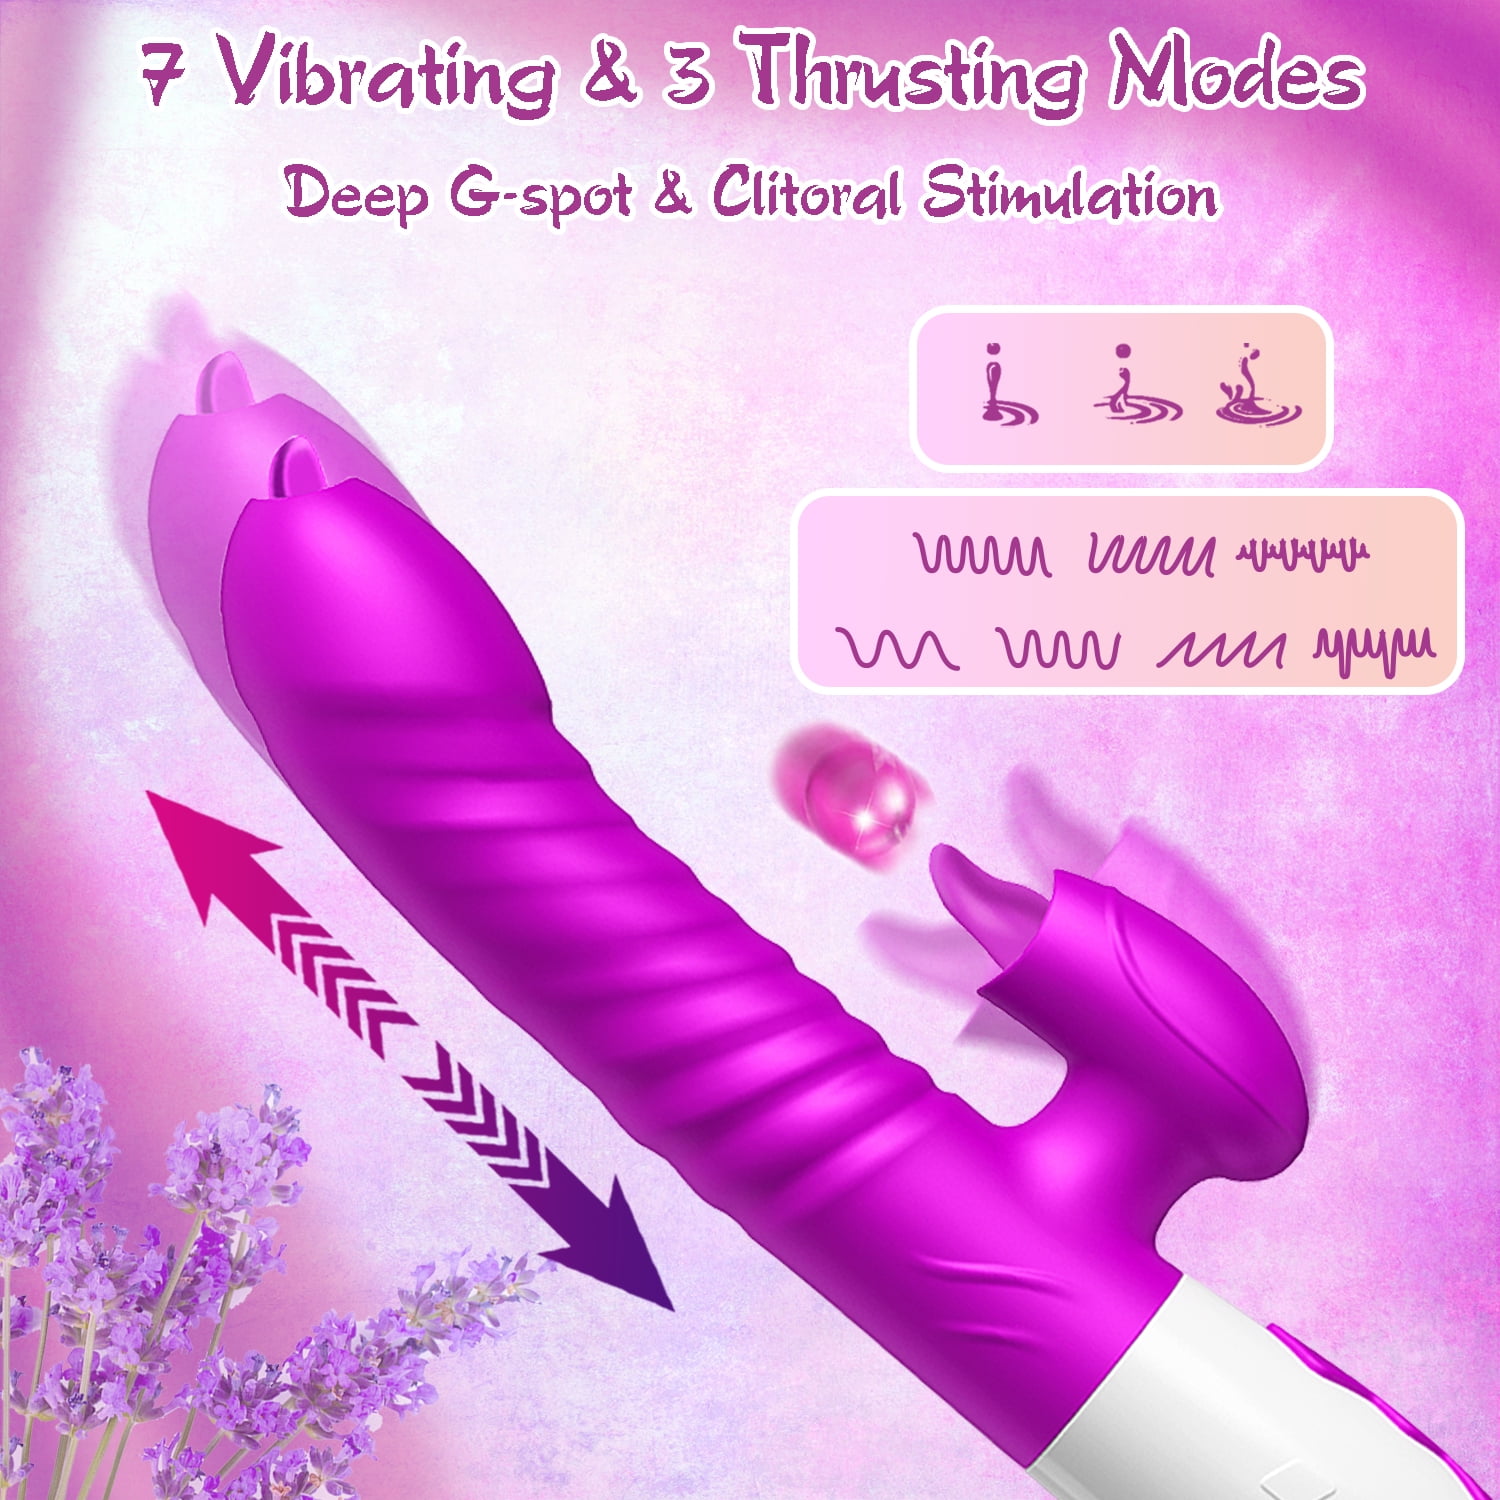 annie tedesco recommends women using rabbit vibrator pic